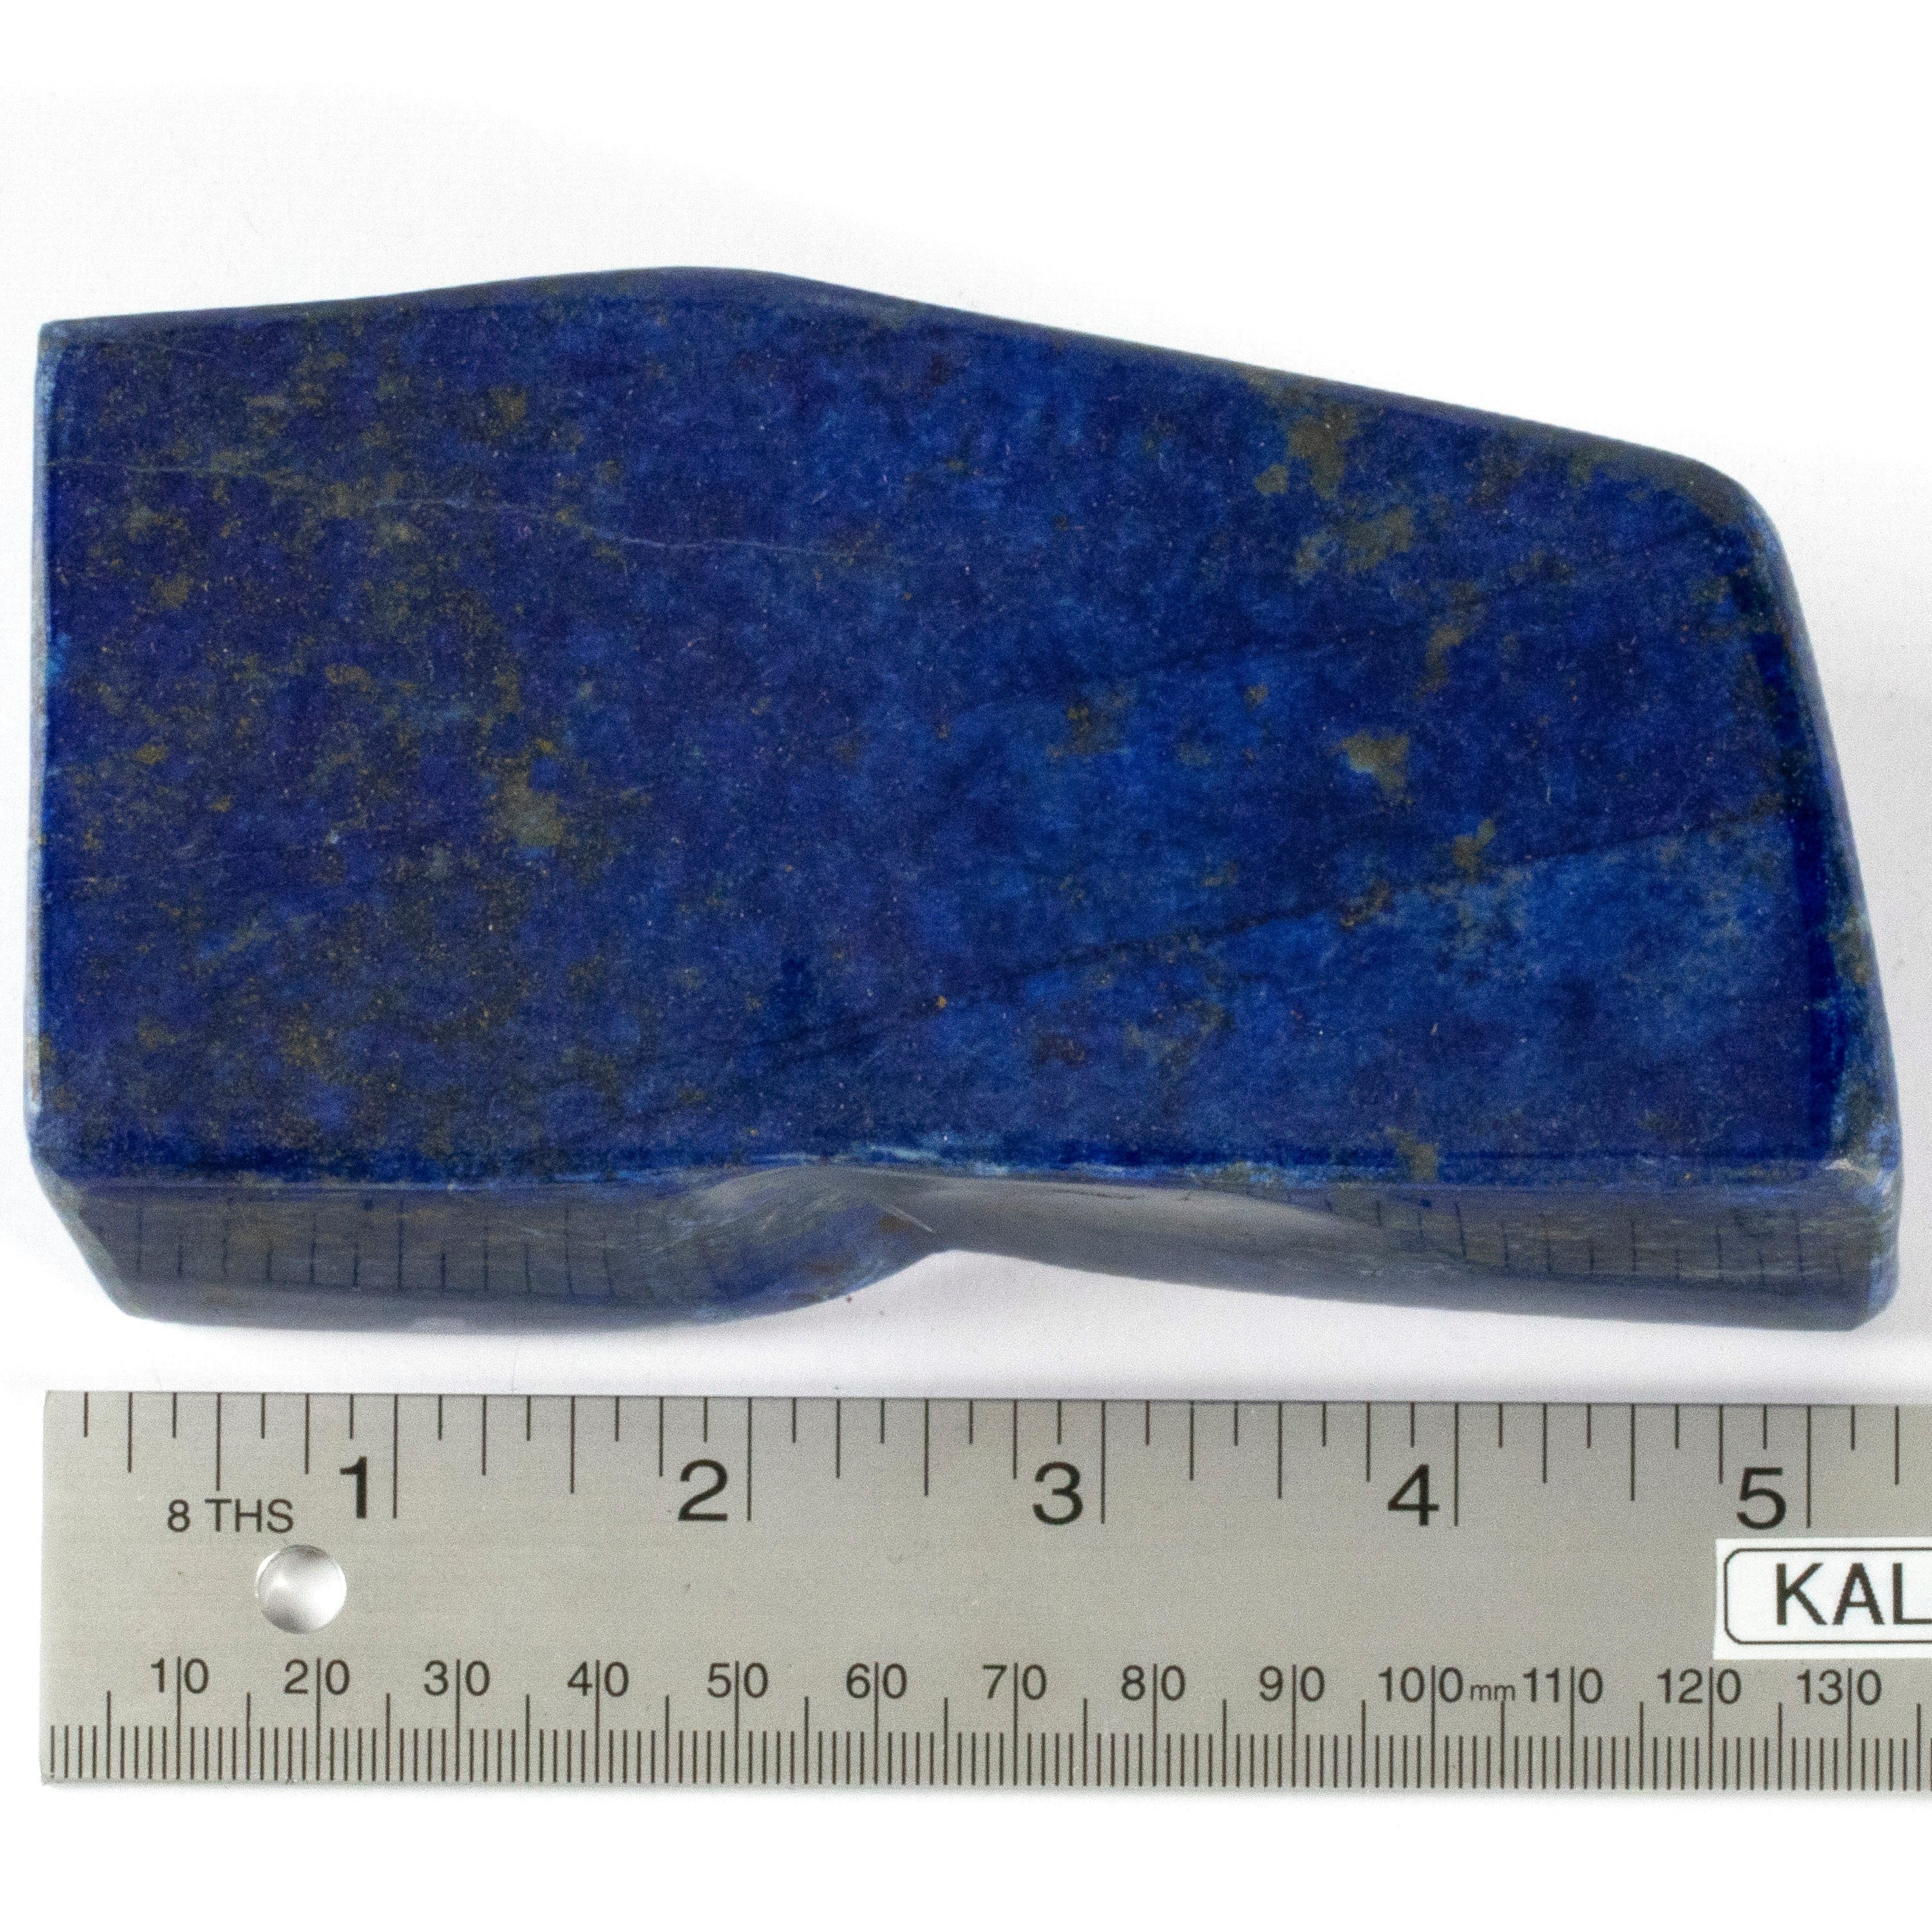 Kalifano Lapis Lapis Lazuli Freeform from Afghanistan - 2.5" / 858 grams LP900.011